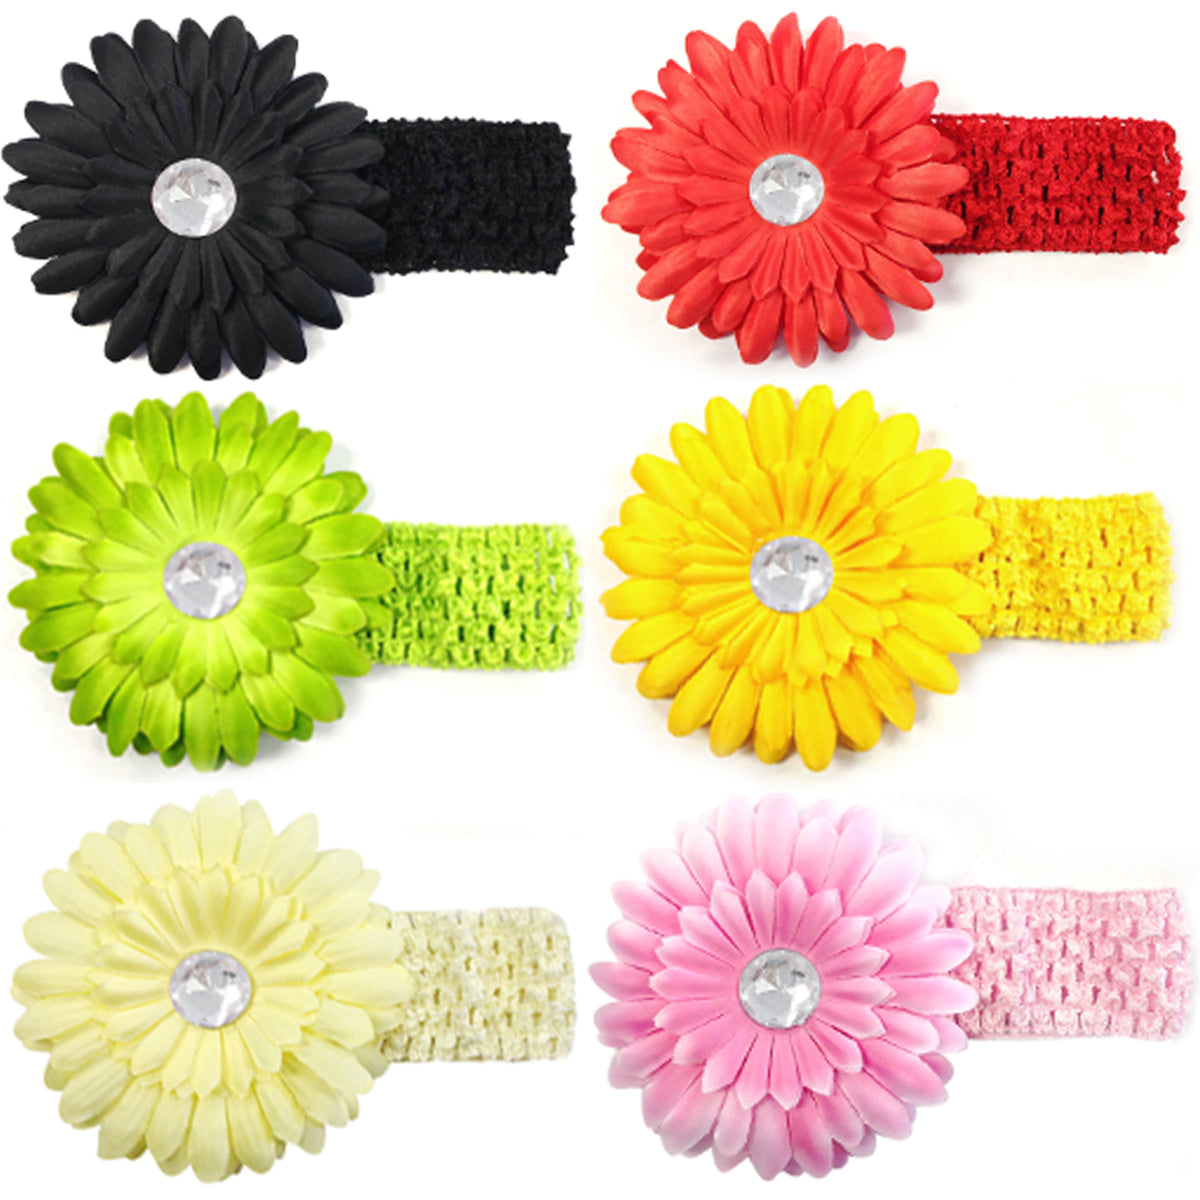 Kella Milla Assorted Gerber Daisy Flower Hair Clips With Soft Stretchy Crochet Baby Headbands (24 Pack, 12 Flowers + 12 Headbands)